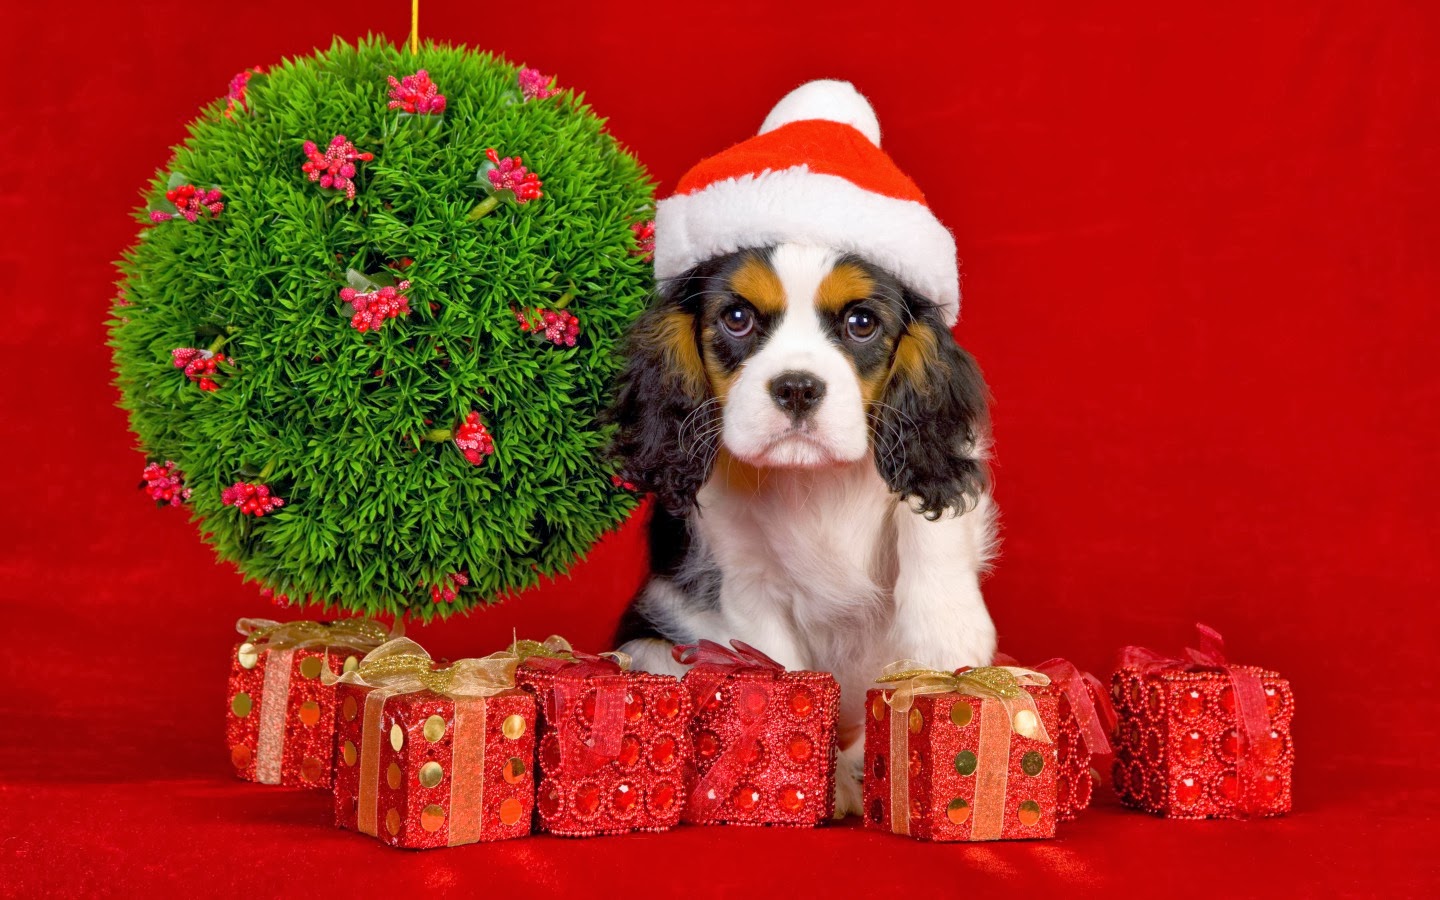 https://1.bp.blogspot.com/-vEZZyQ1OtGU/X-7Xeg2ga8I/AAAAAAAAk4s/rxtTjIBF-VE3SLow1uN8_pxqIBSDytlXACLcBGAsYHQ/s16000/2020_Christmas_Gift_Guide_for_Aussie_Dogs_Cavalier_King_Charles_Spaniel_with_Santa_Hat.jpg